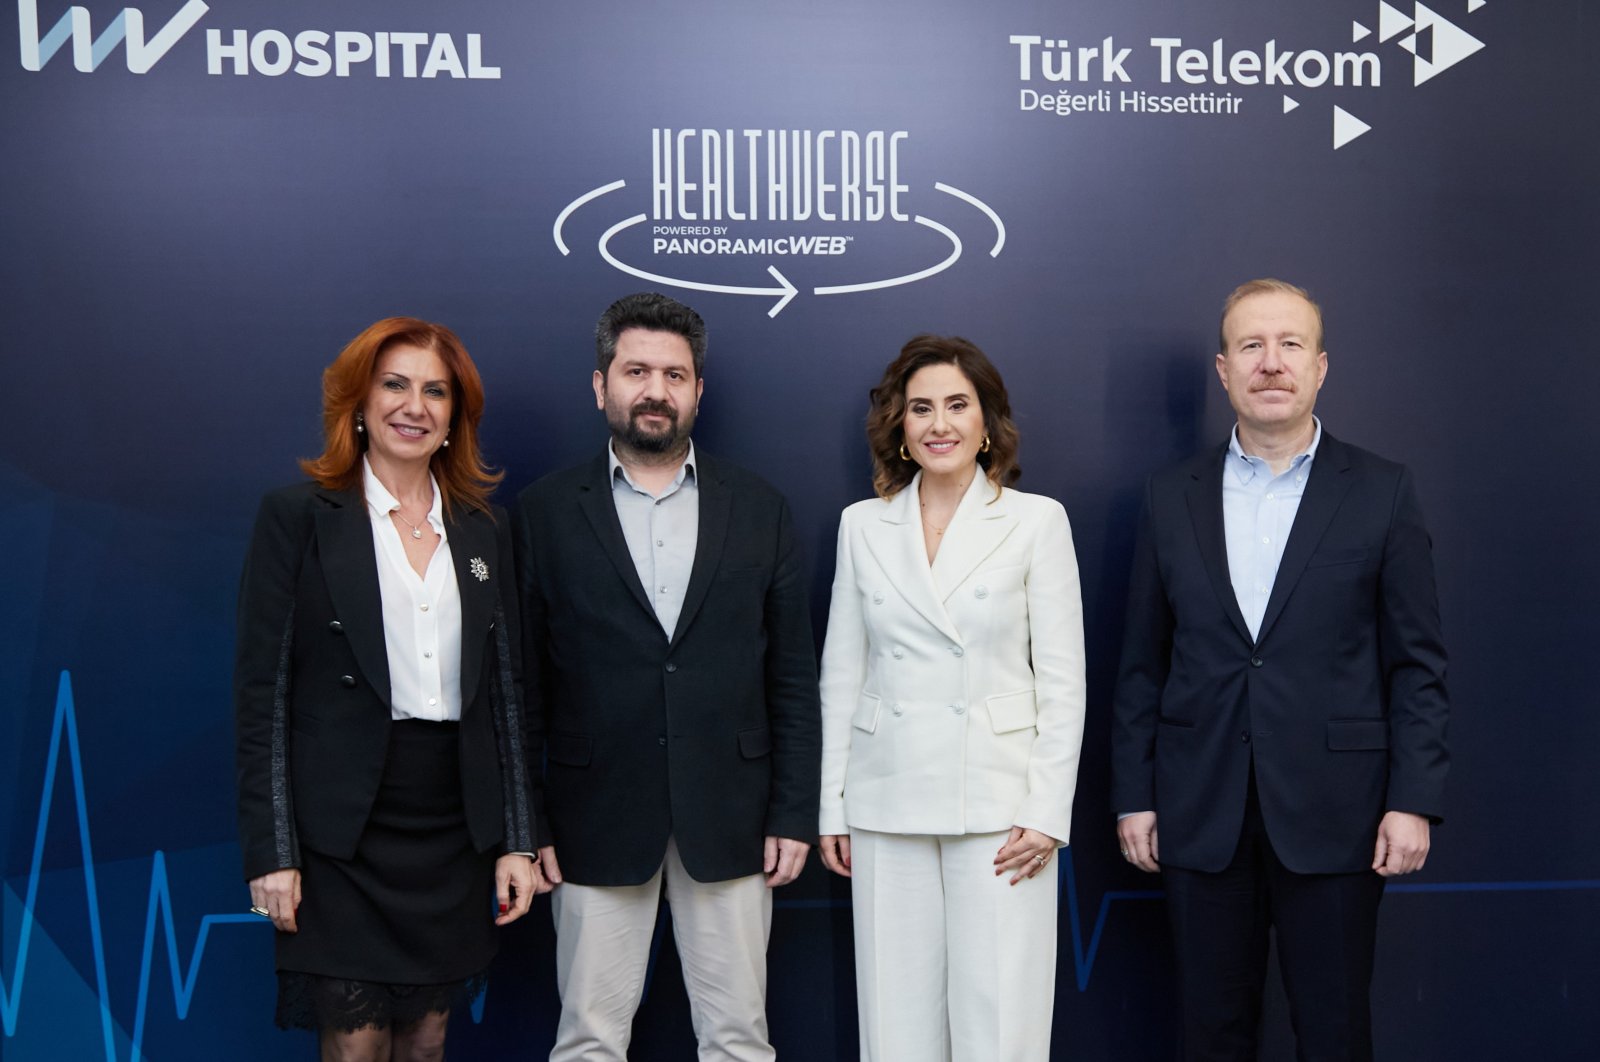 Kemitraan Türk Telekom-Healthverse PanoramicWEB mengubah dinamika telehealth